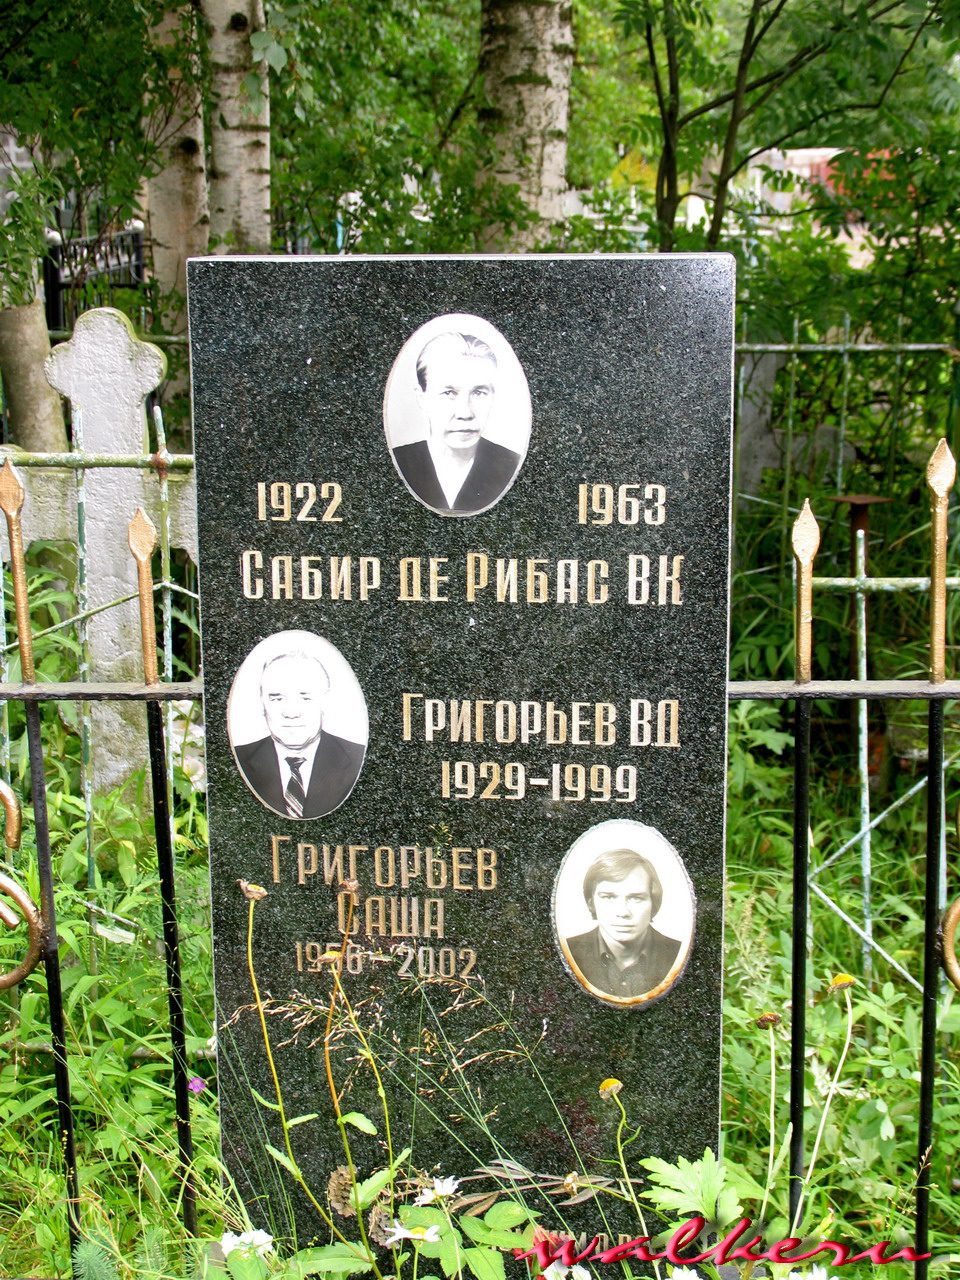 Могила Сабира де Рибаса В.К. на Старапановском кладбище